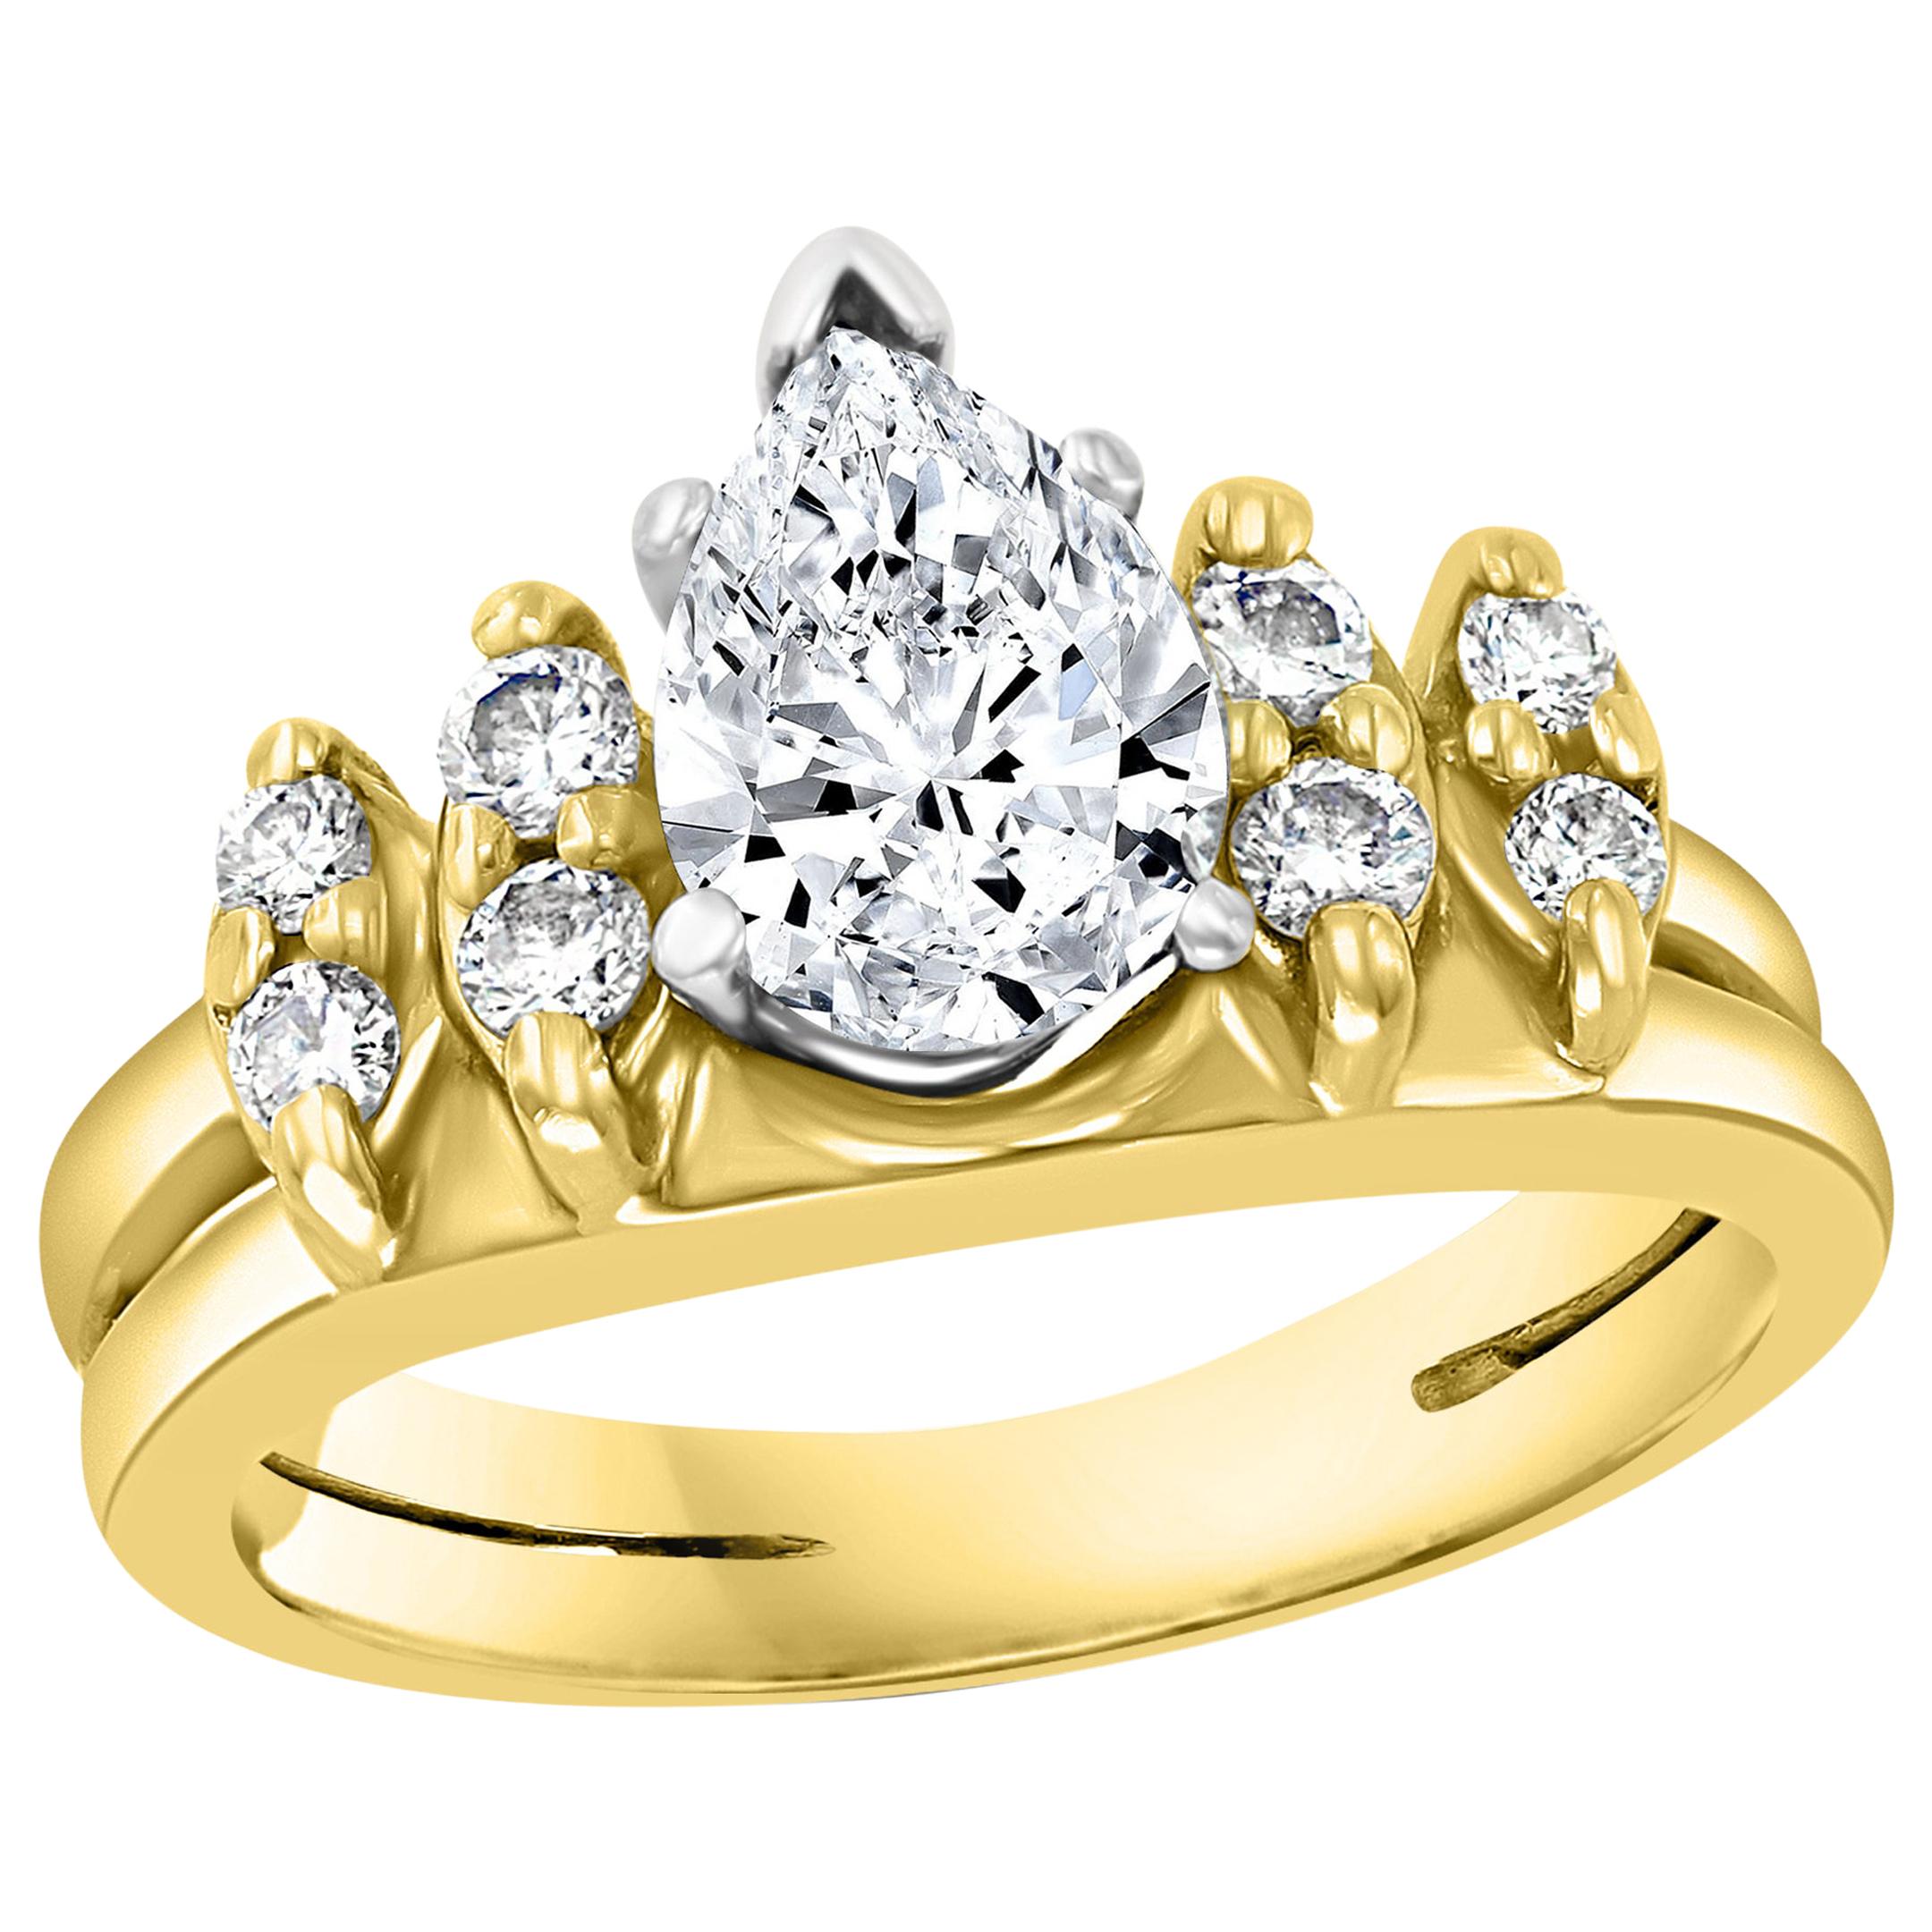 1.0 Carat Pear Shape Center Diamond Engagement 14 Karat Yellow Gold Ring